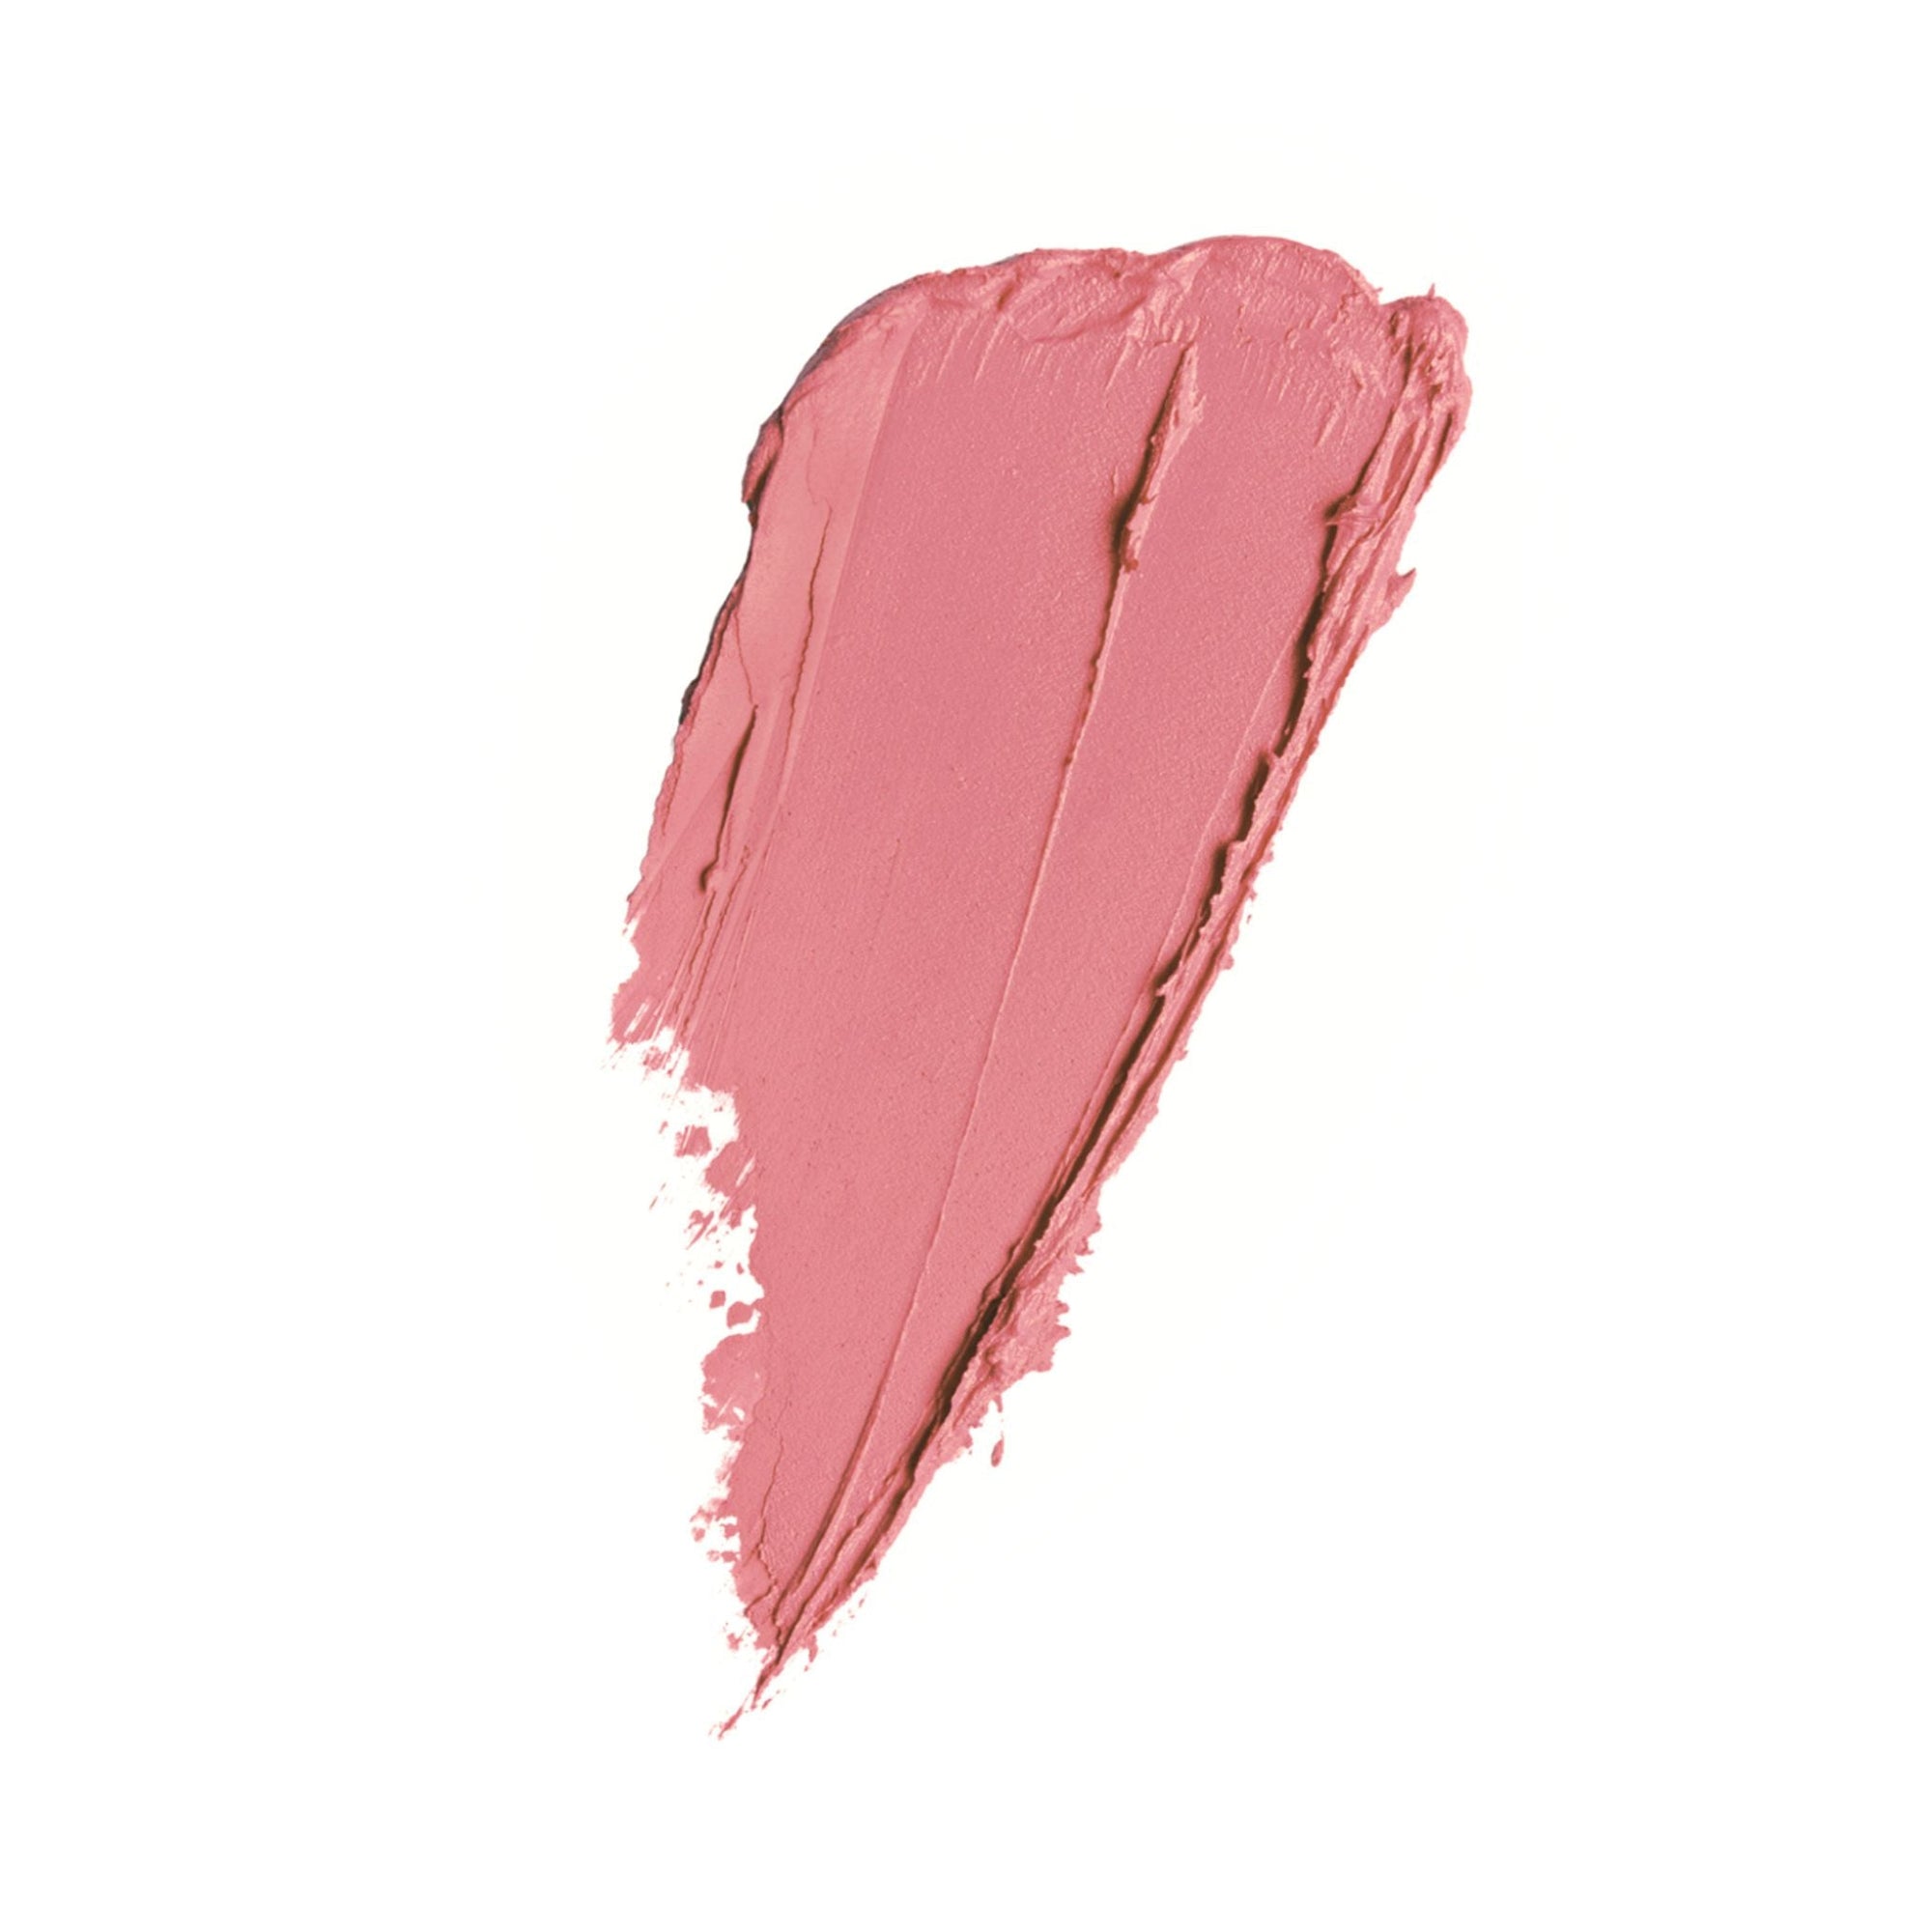 Wonderblush - Wonderblush Le Rouge Lipstick - ORESTA clean beauty simplified